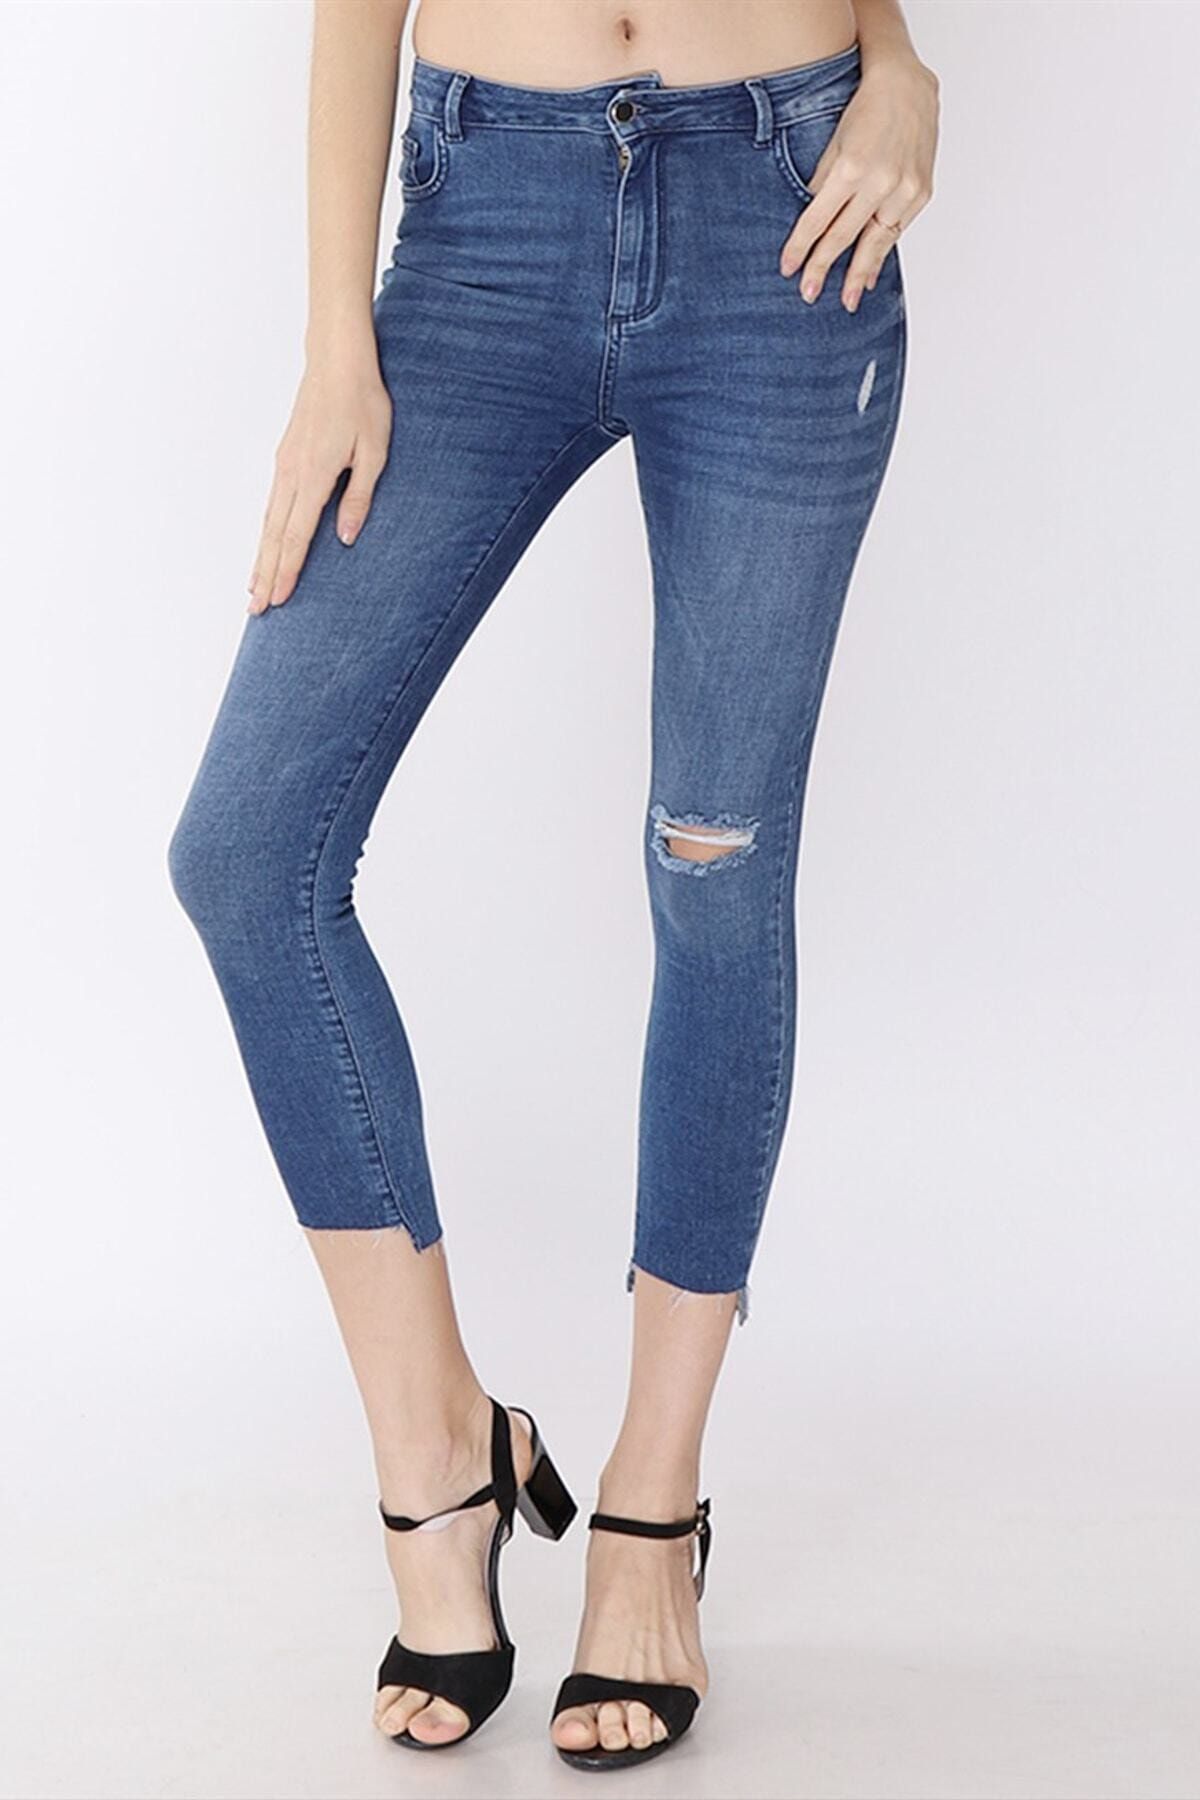 Twister Jeans Jeans Eva 9028-54 (T) 54 - 19Sb01000060-054